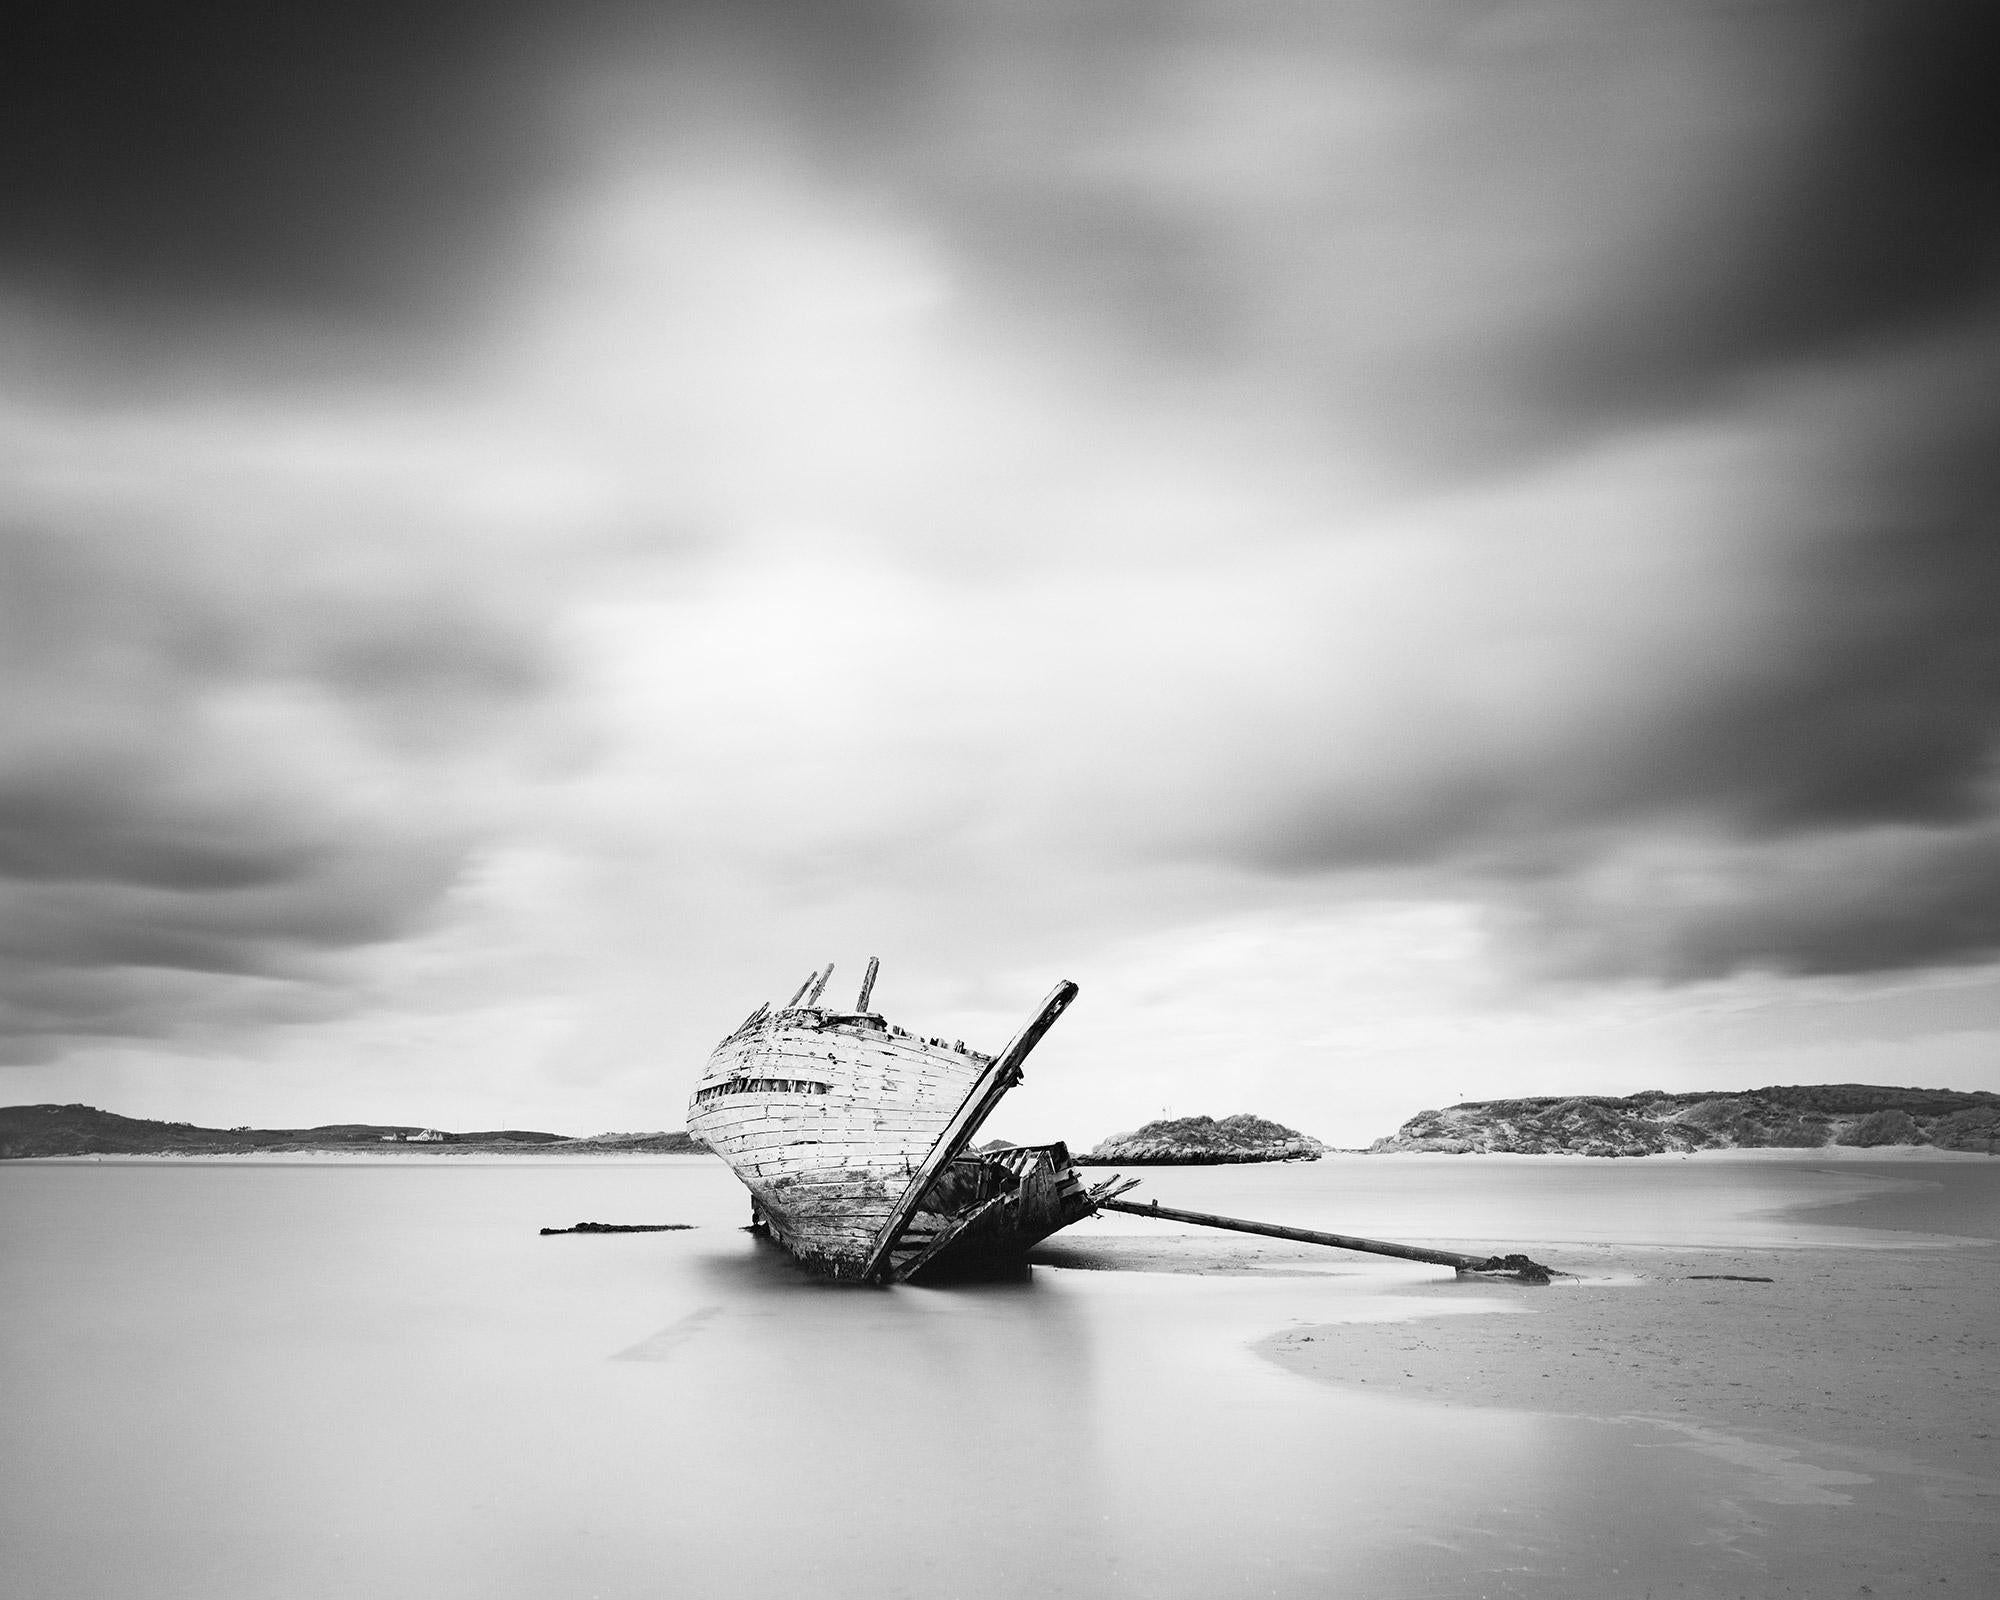 Gerald Berghammer Landscape Photograph - Bad Eddies, Sunken Boat, Beach, Ireland, black and white landscape photography